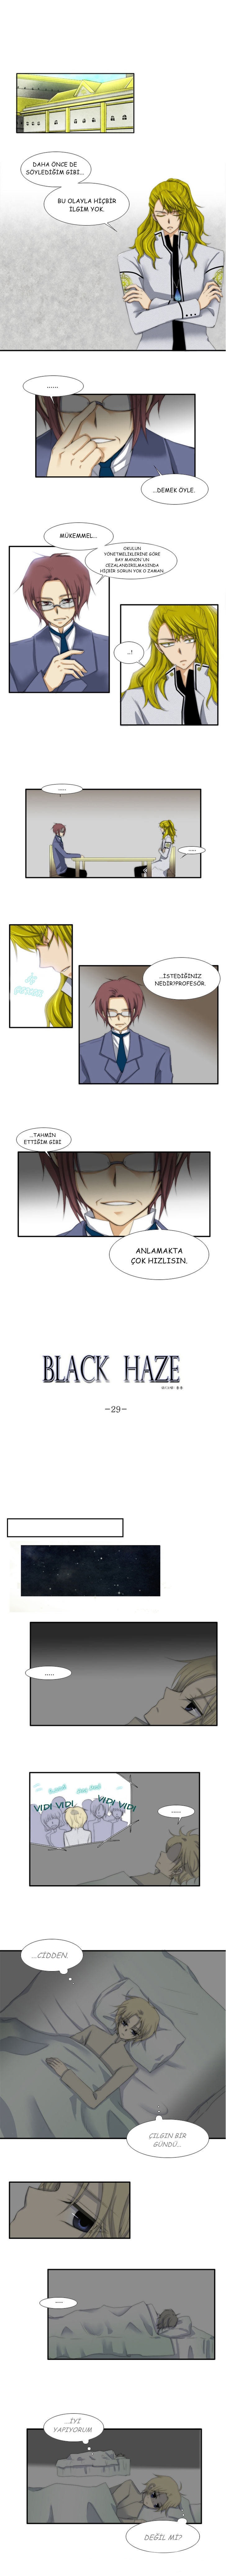 Black Haze: Chapter 29 - Page 2